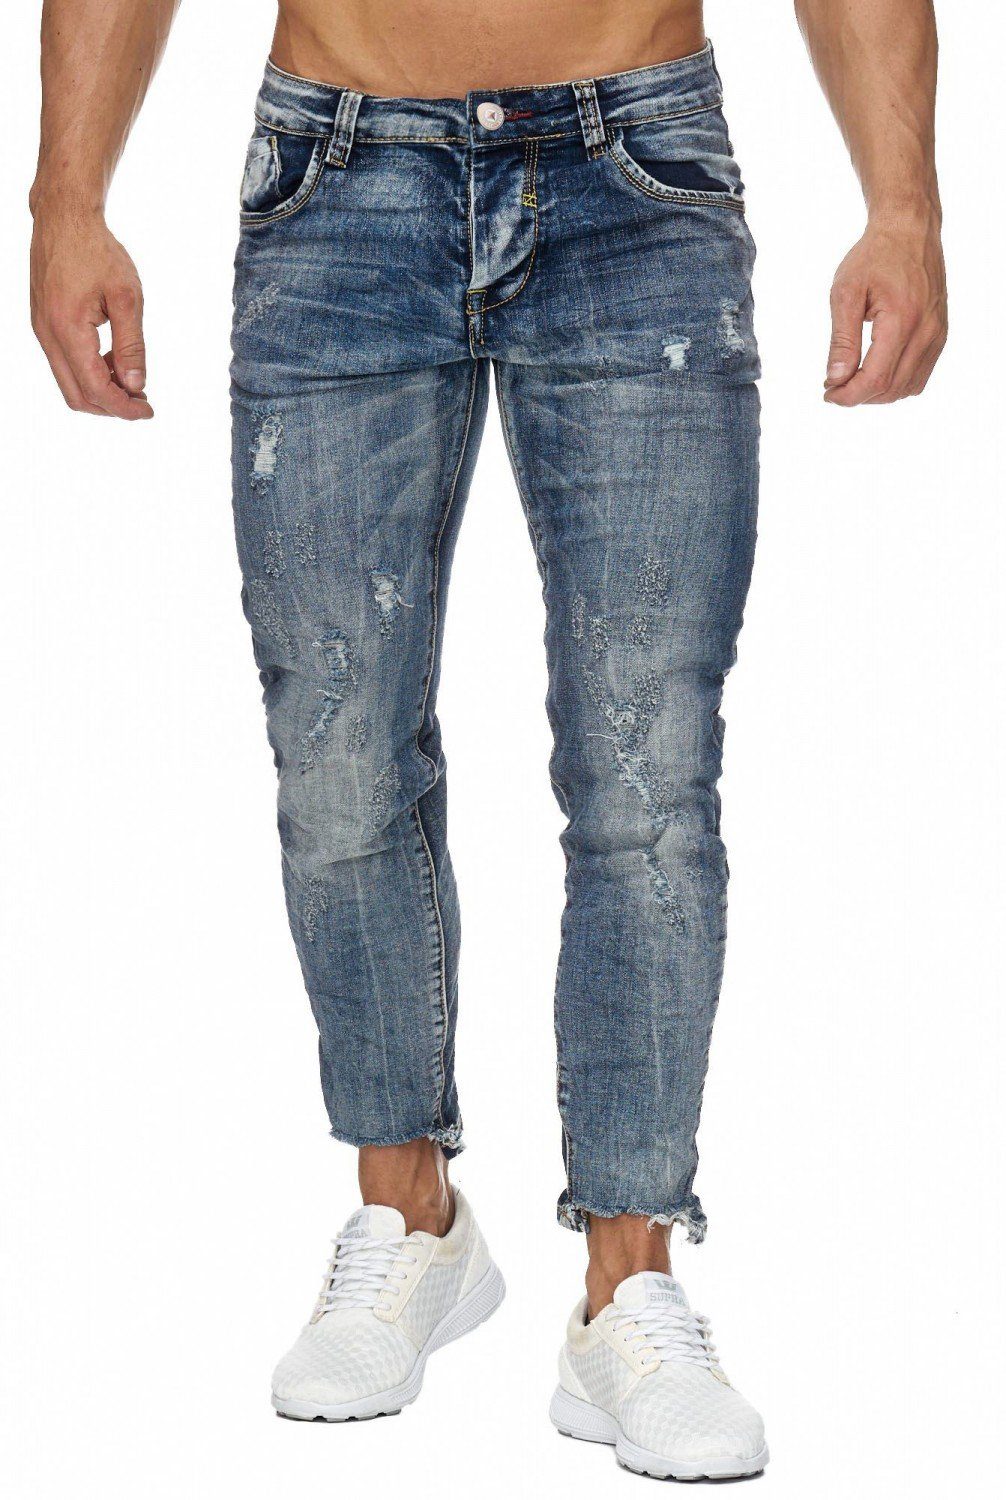 Jaylvis Slim-fit-Jeans »Herren Ripped Jeans Destroyed 7/8 Hose Regular Fit  Pants Tapered« (slim fit, 1-tlg., Knöpfe) 1960 in Blau online kaufen | OTTO